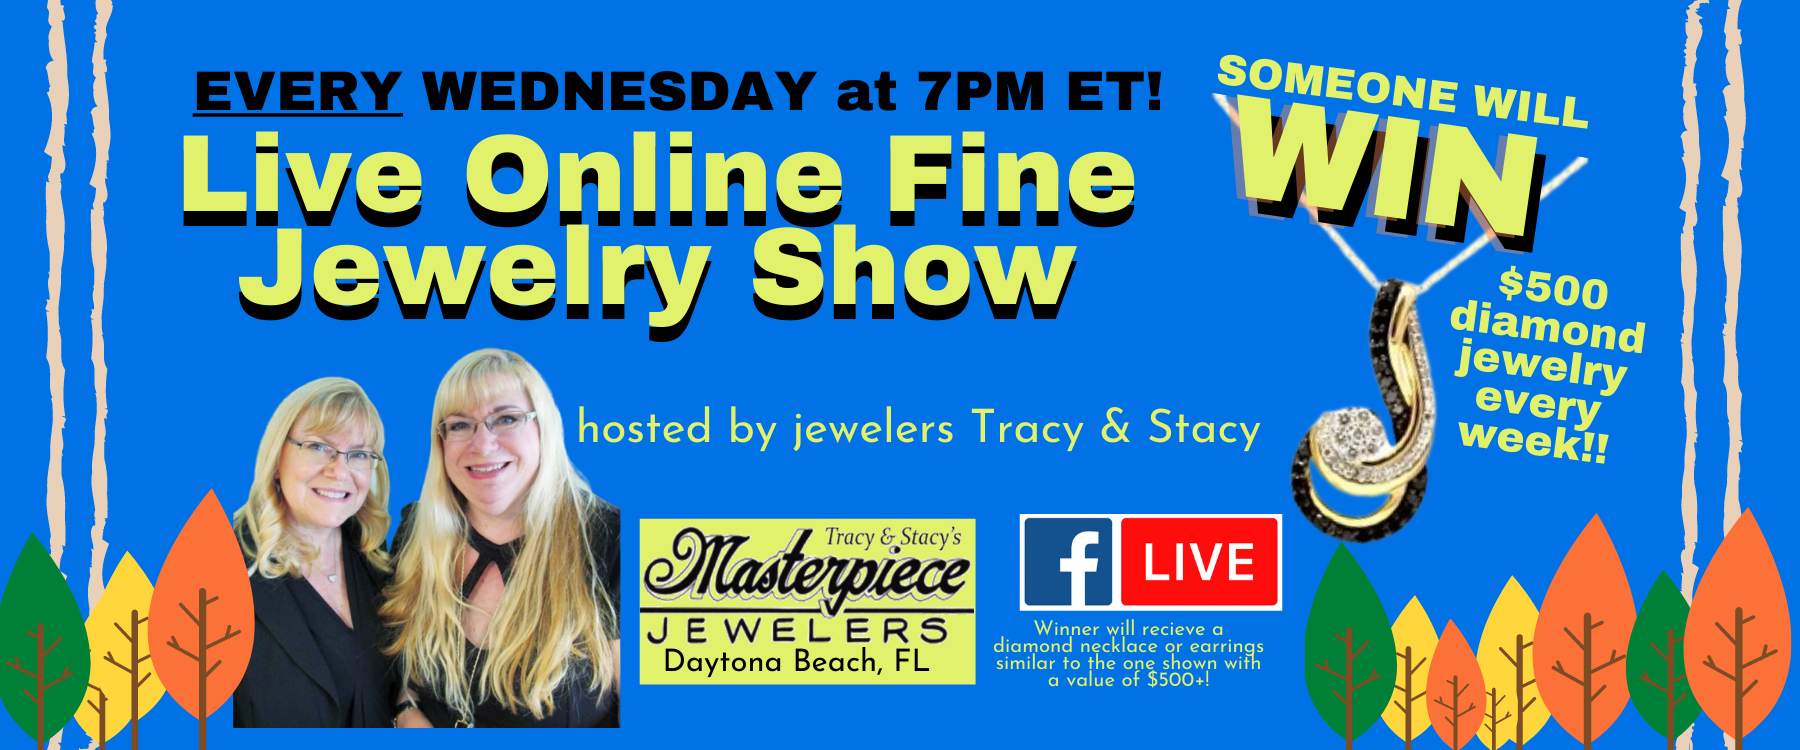 Daytona Beach jewelry store has online sale every Wednesday, https://www.facebook.com/masterpiecejewelers